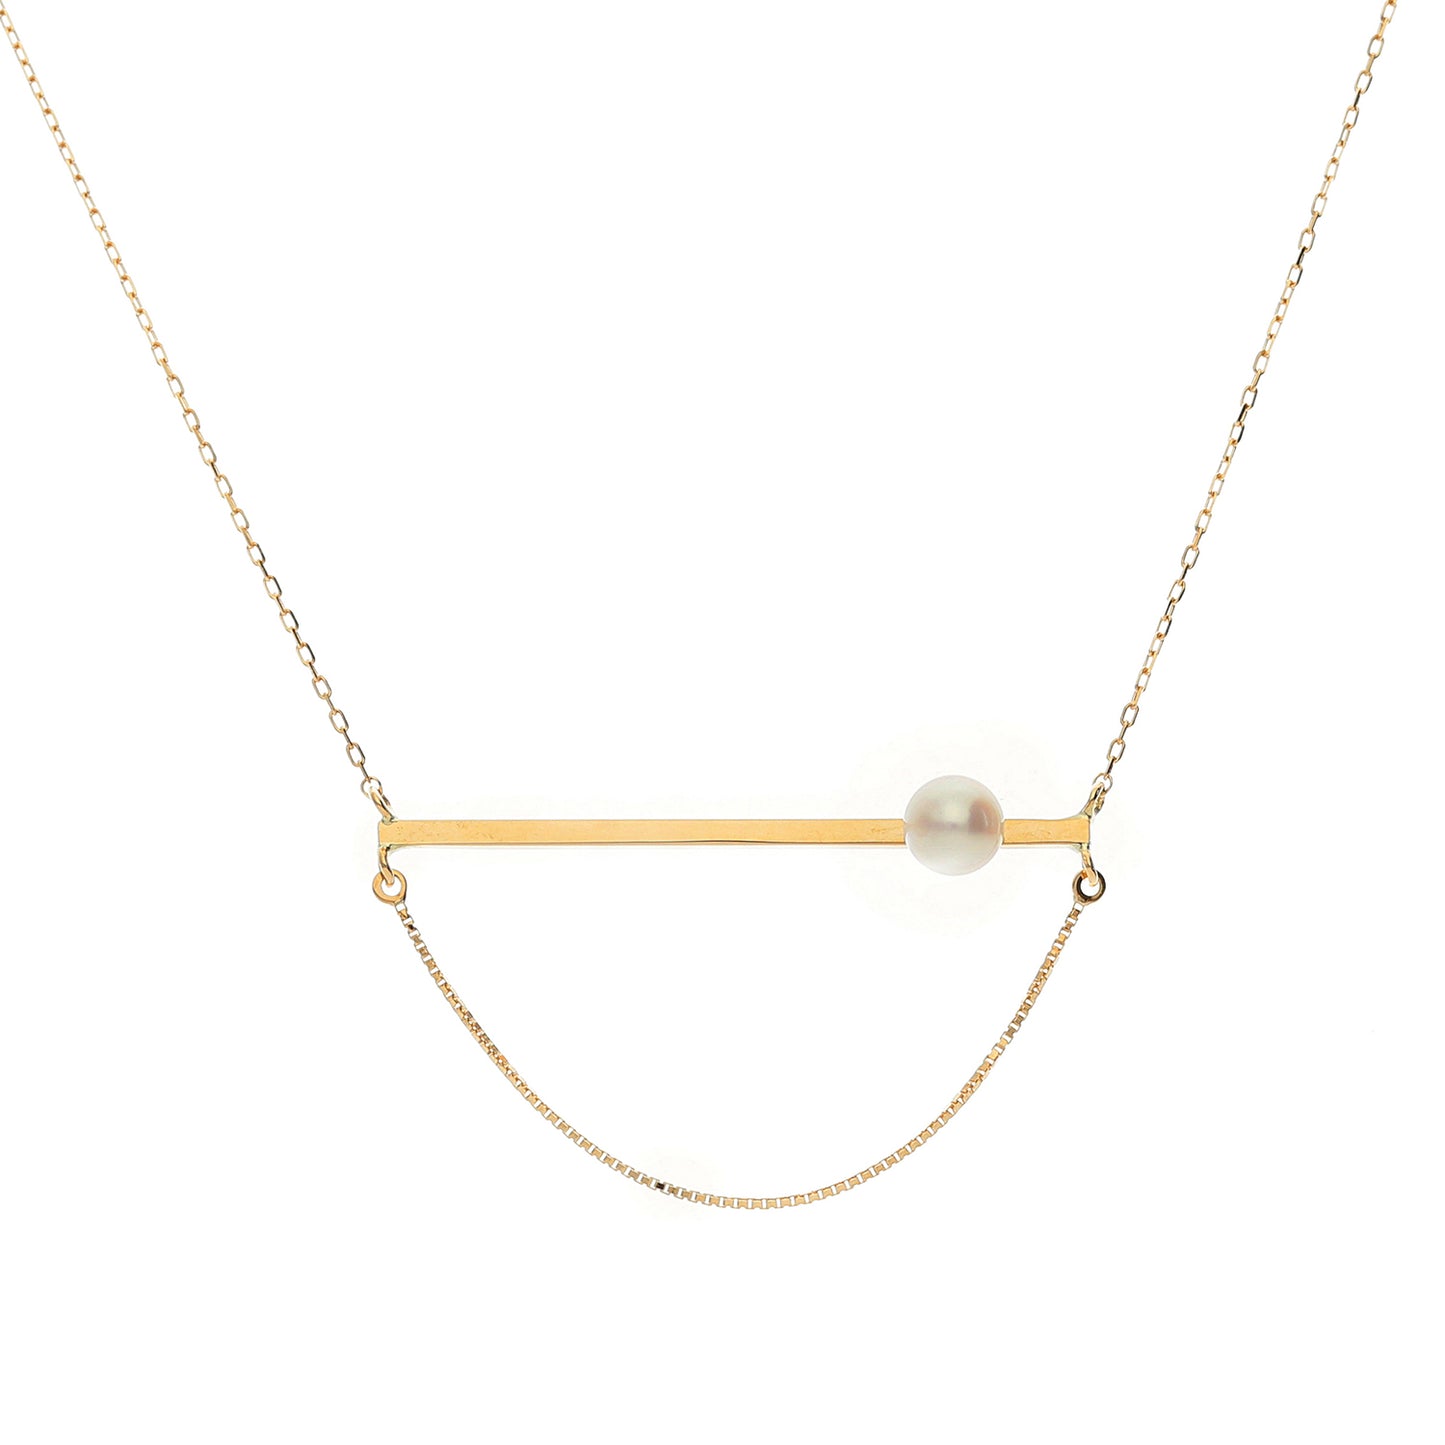 K18YG Akoya pearl necklace 96-1202